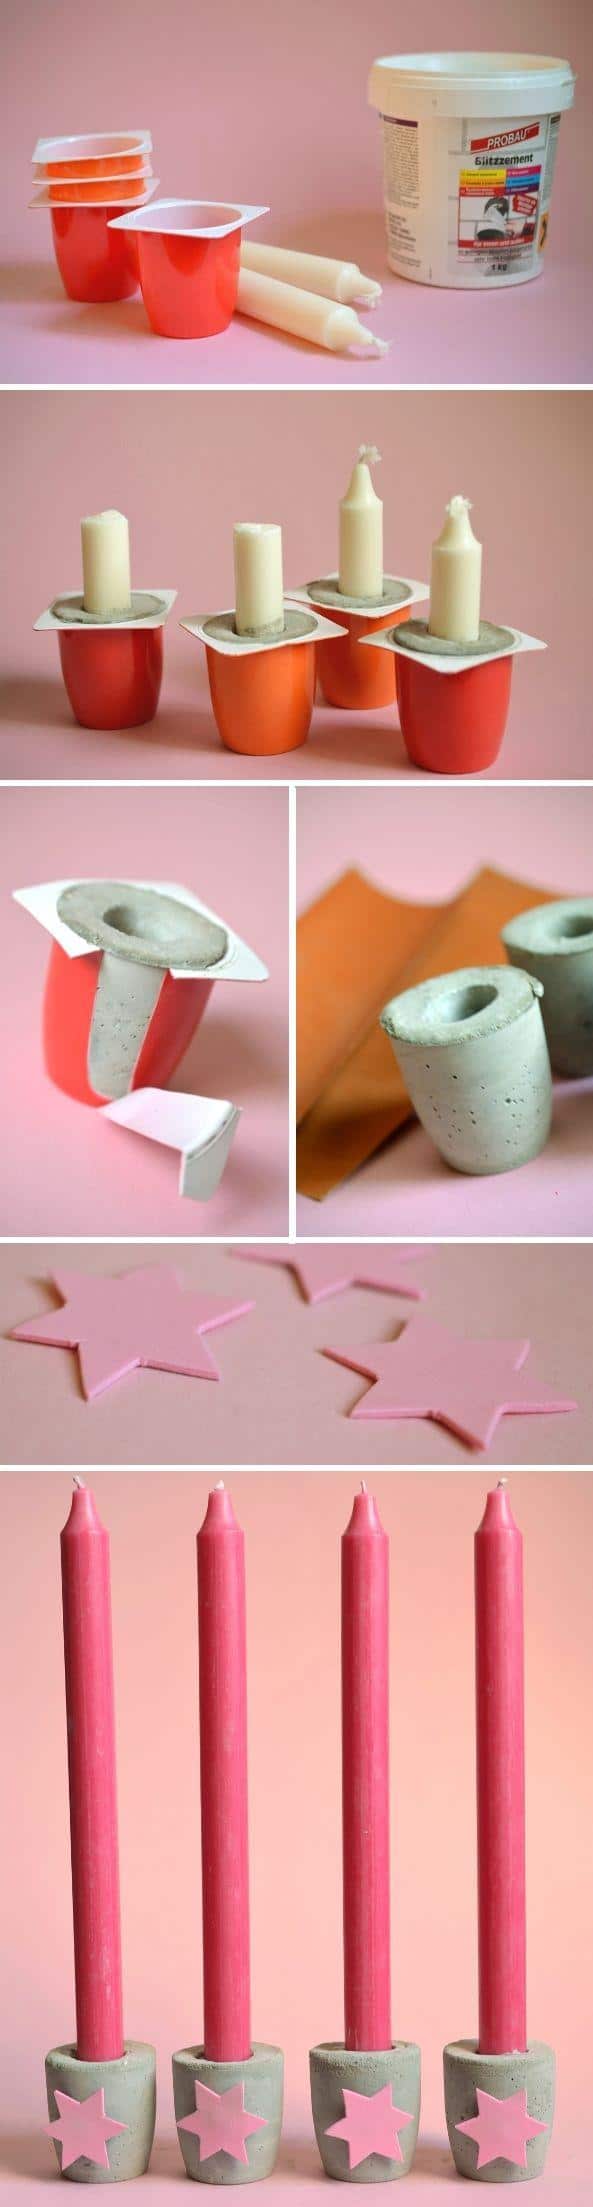 DIY candleholders - made of yogurt cups